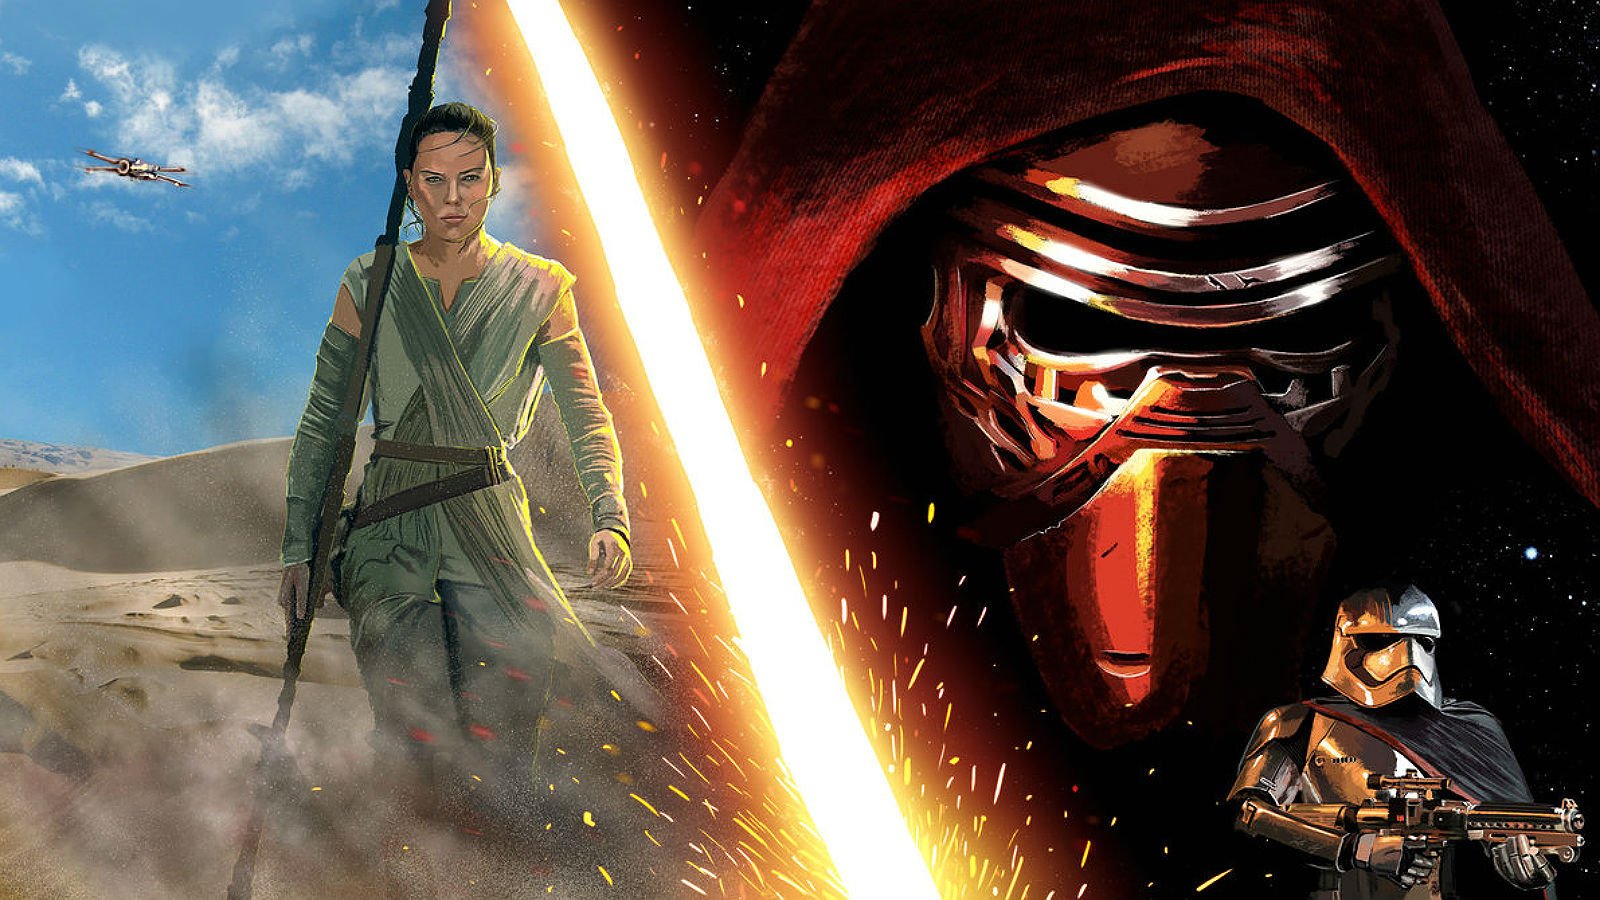 star wars the force awakens full movie online free